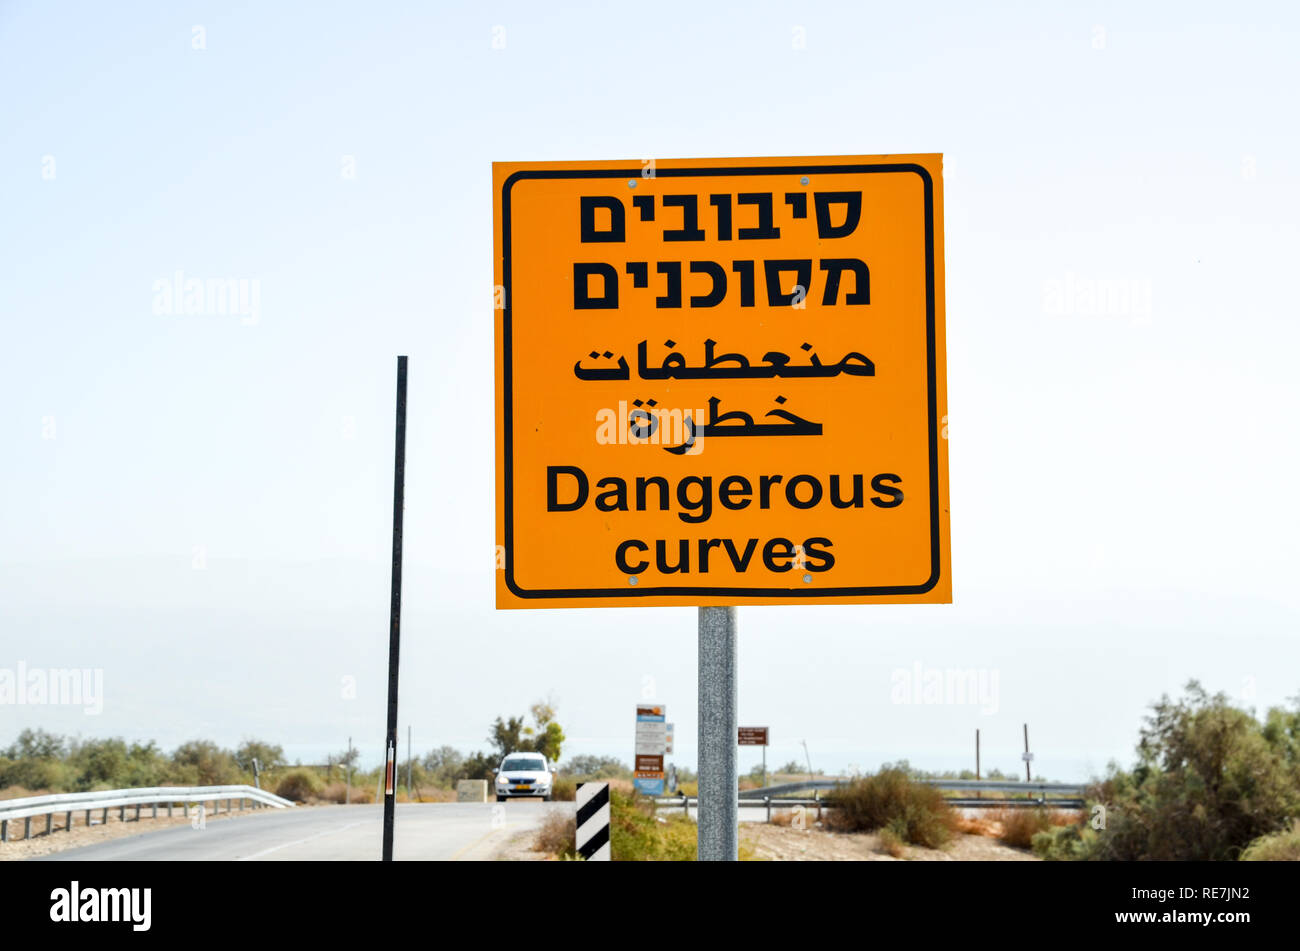 Señal de carretera de curvas 'peligrosas' en hebreo, árabe e inglés, en la Ribera Occidental Palestina/Israel Foto de stock